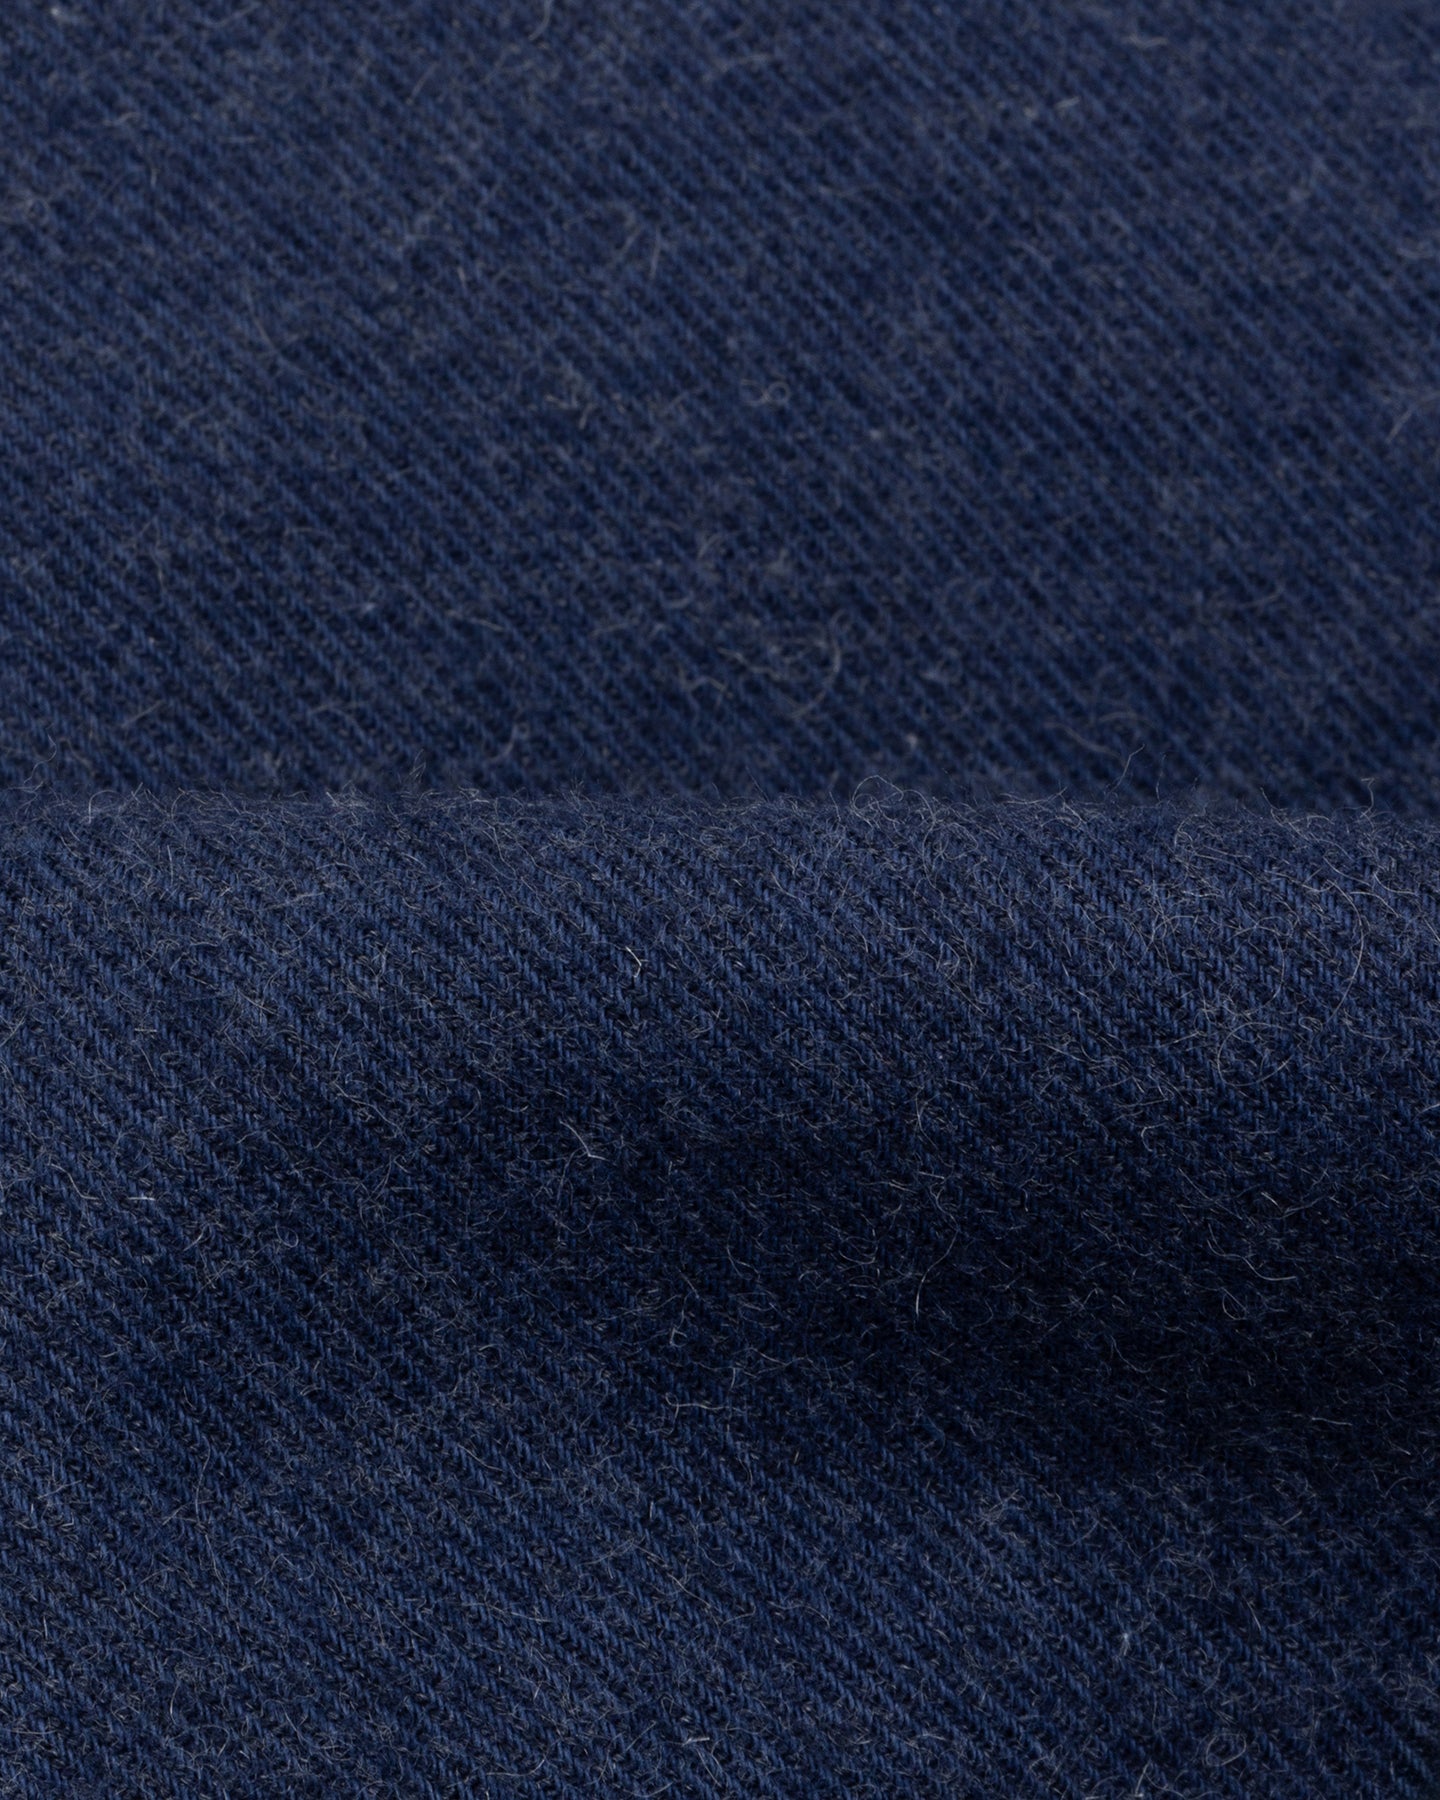 Dark blue cotton cashmer flannel shirt fabric